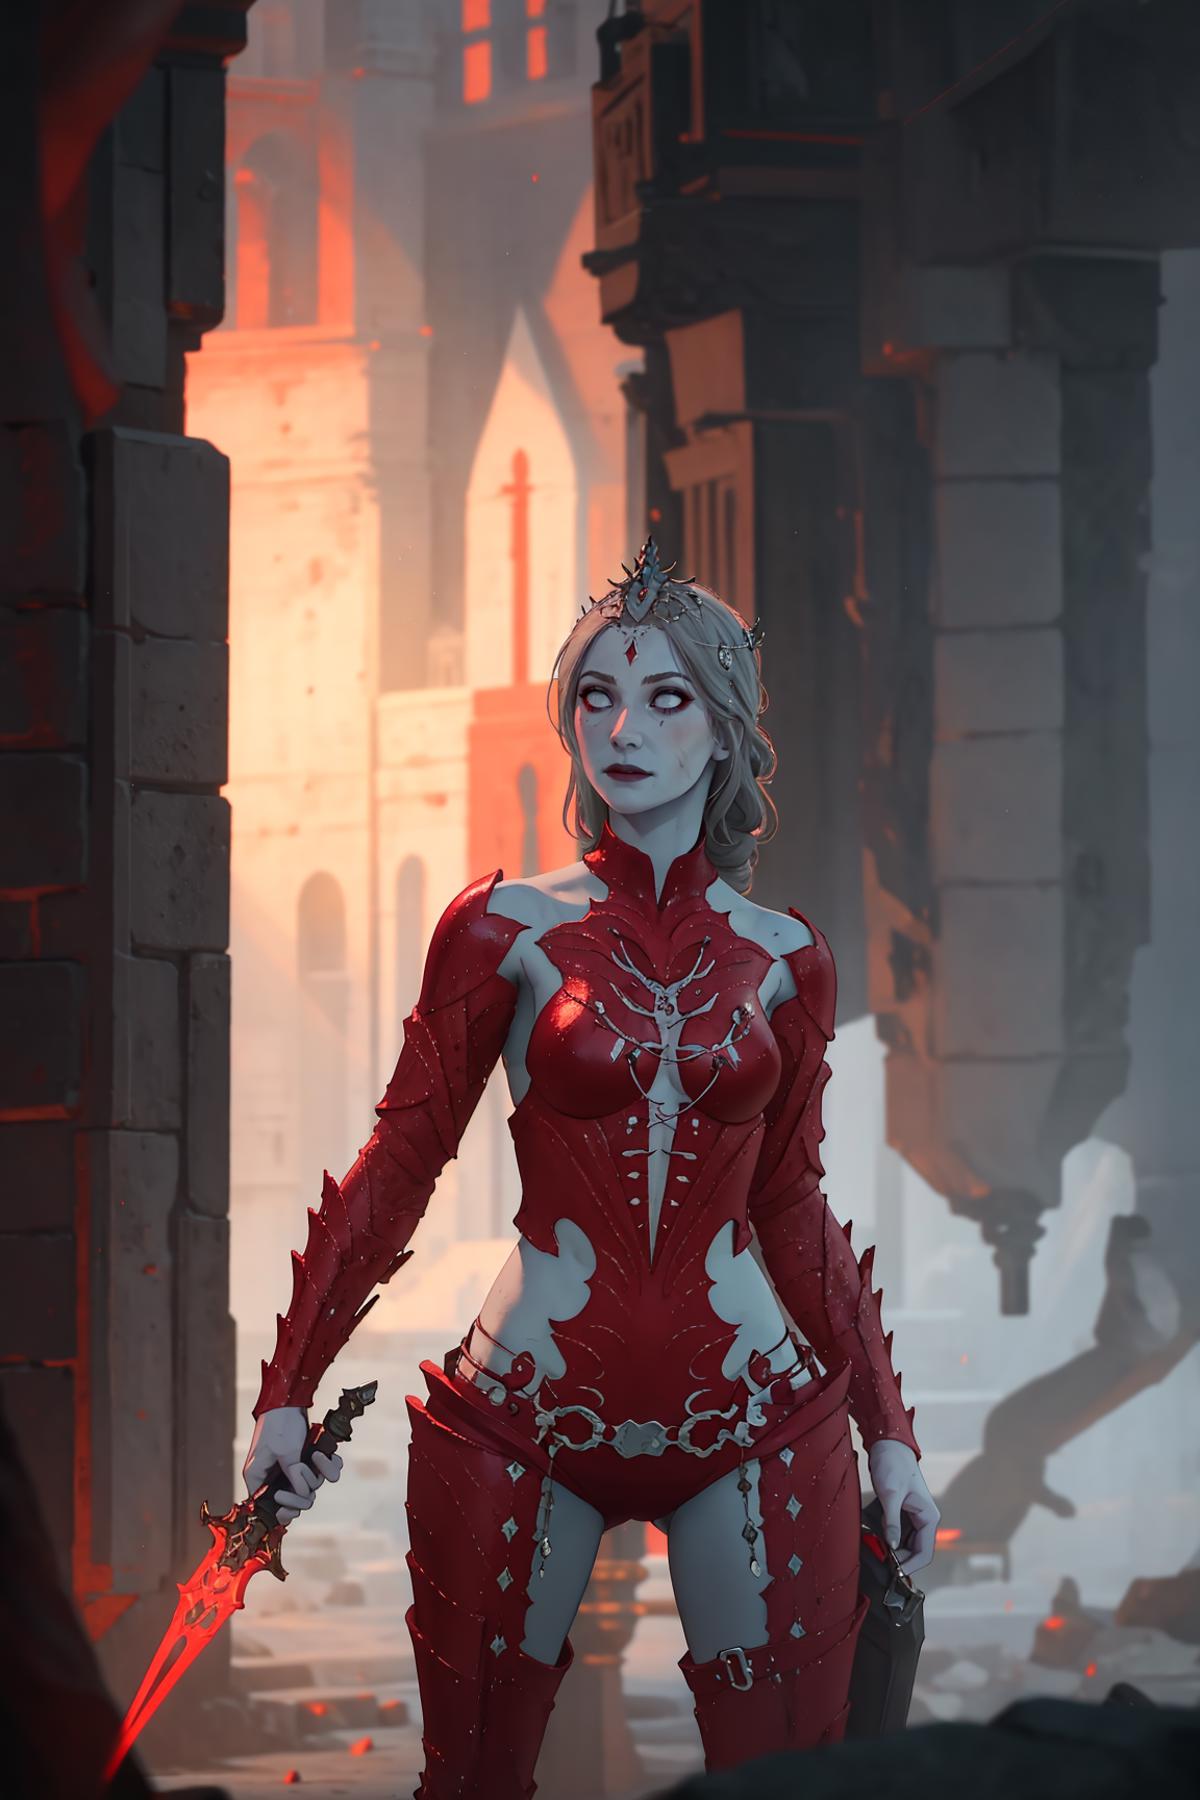 Orin the Red (Baldur's Gate 3) image by penguih